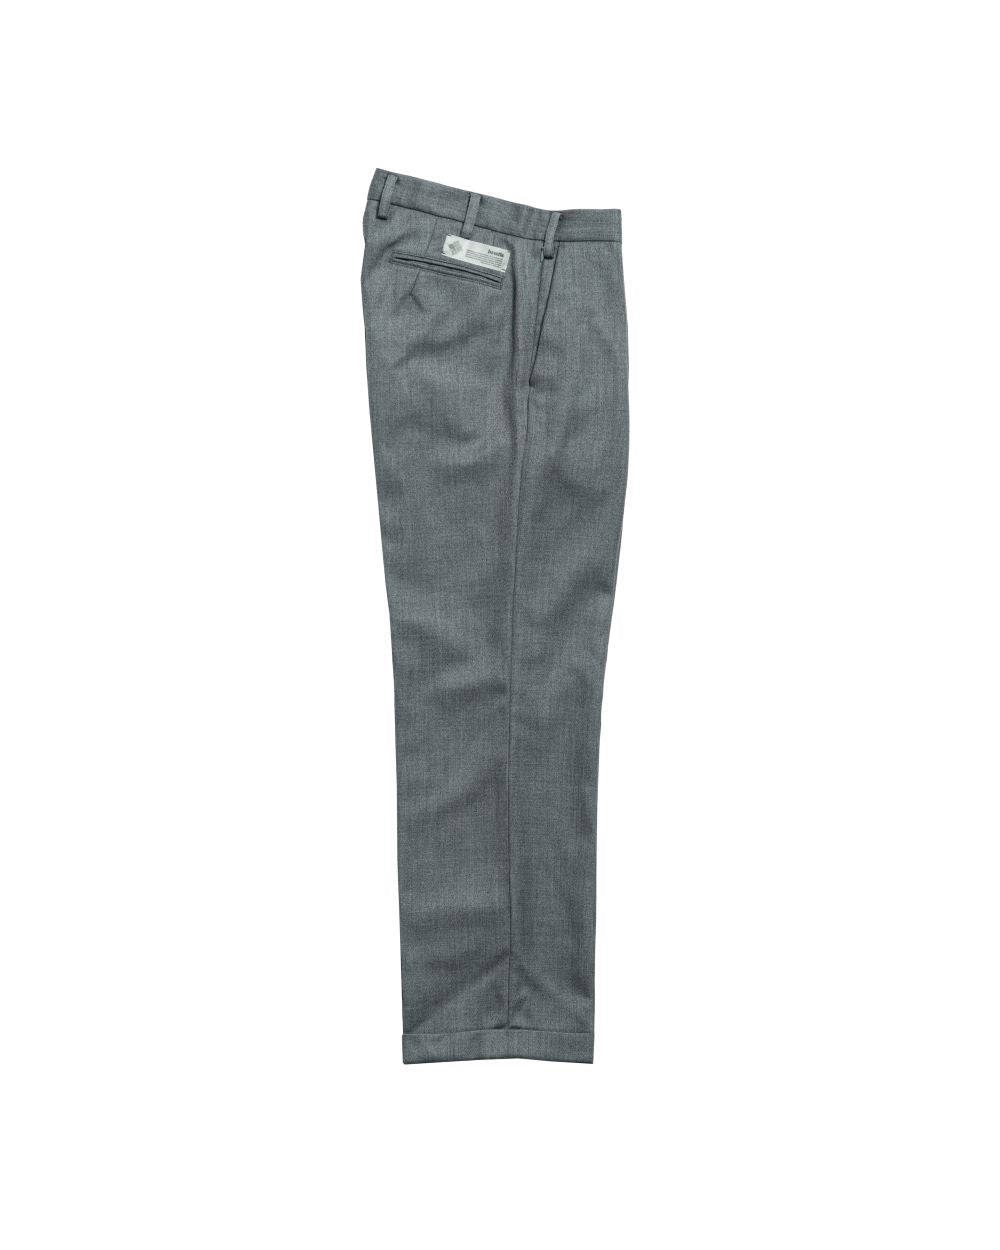 T/W Trousers[M.GRAY]